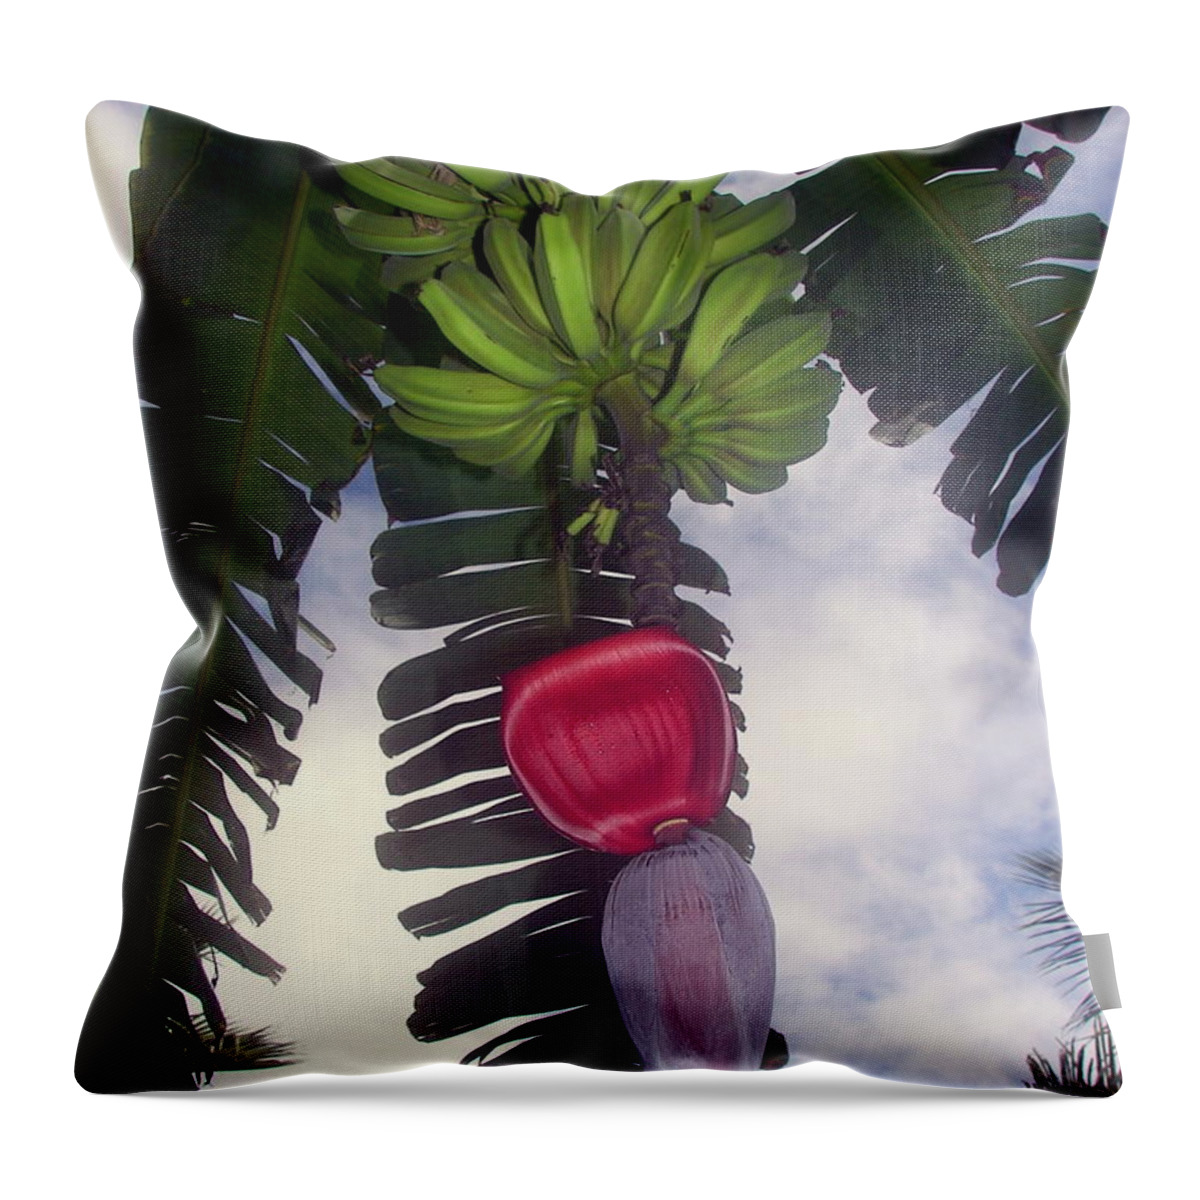 Tropical Throw Pillow featuring the photograph Fruitful Beauty by Karen Wiles